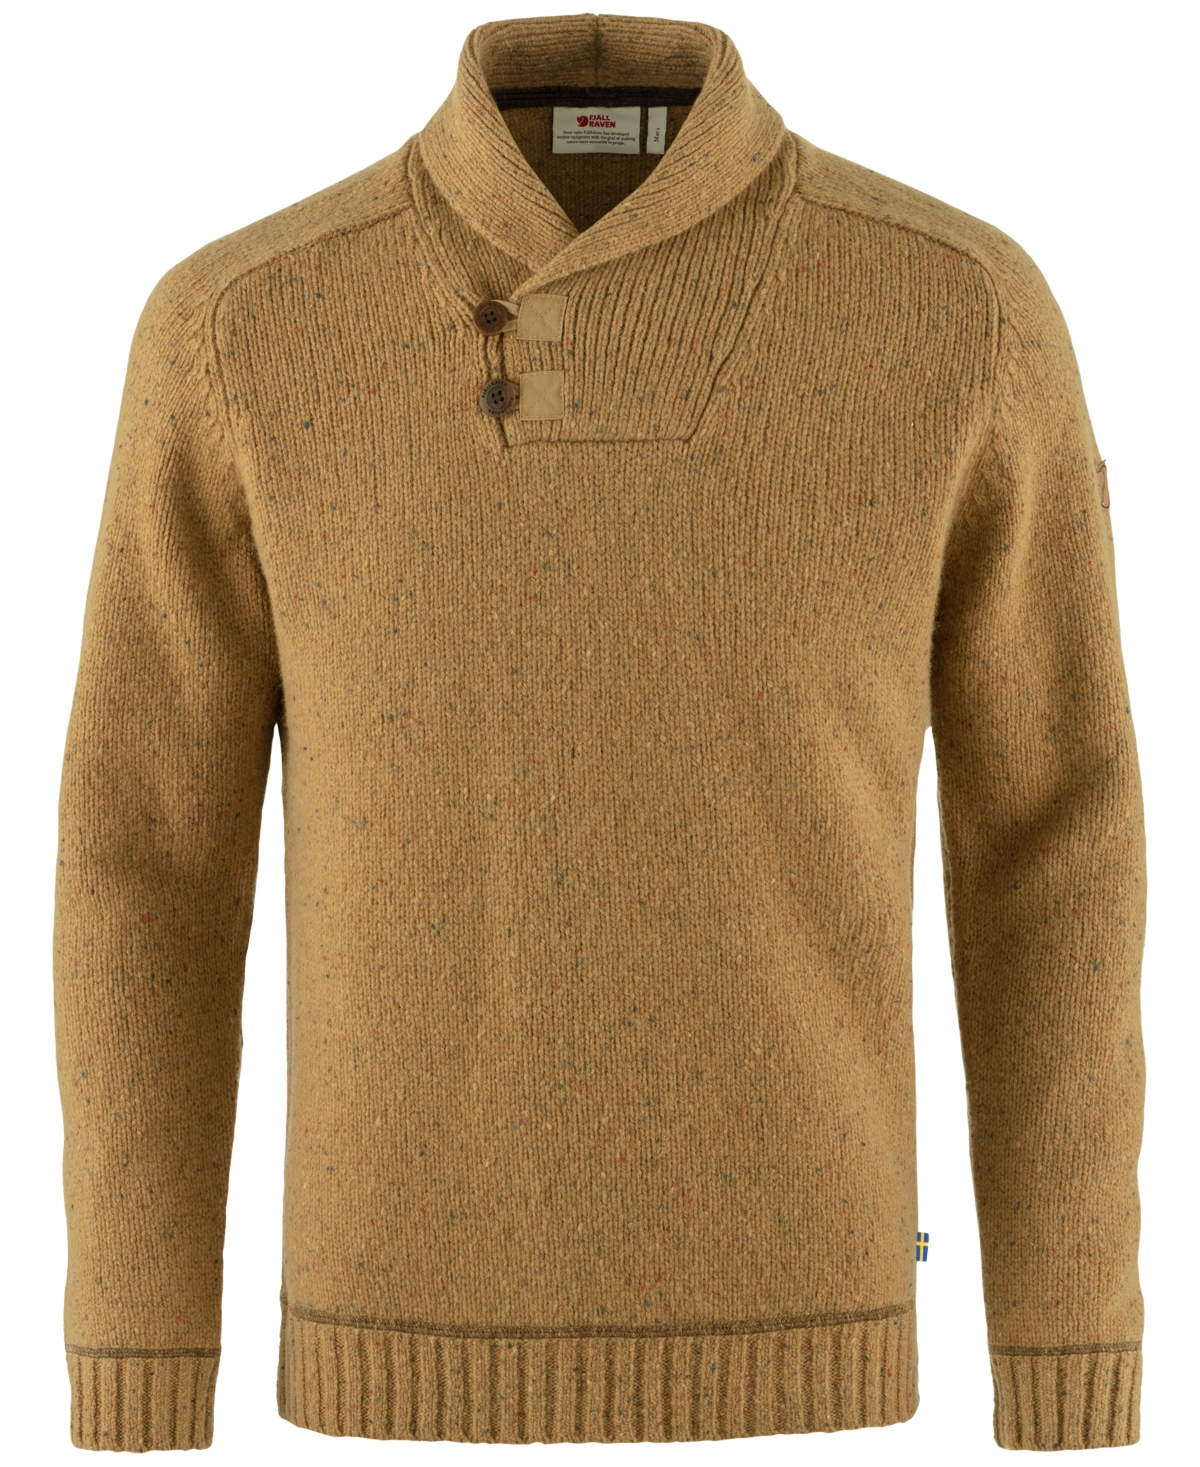 Men's Lada Sweater - Laurel Green